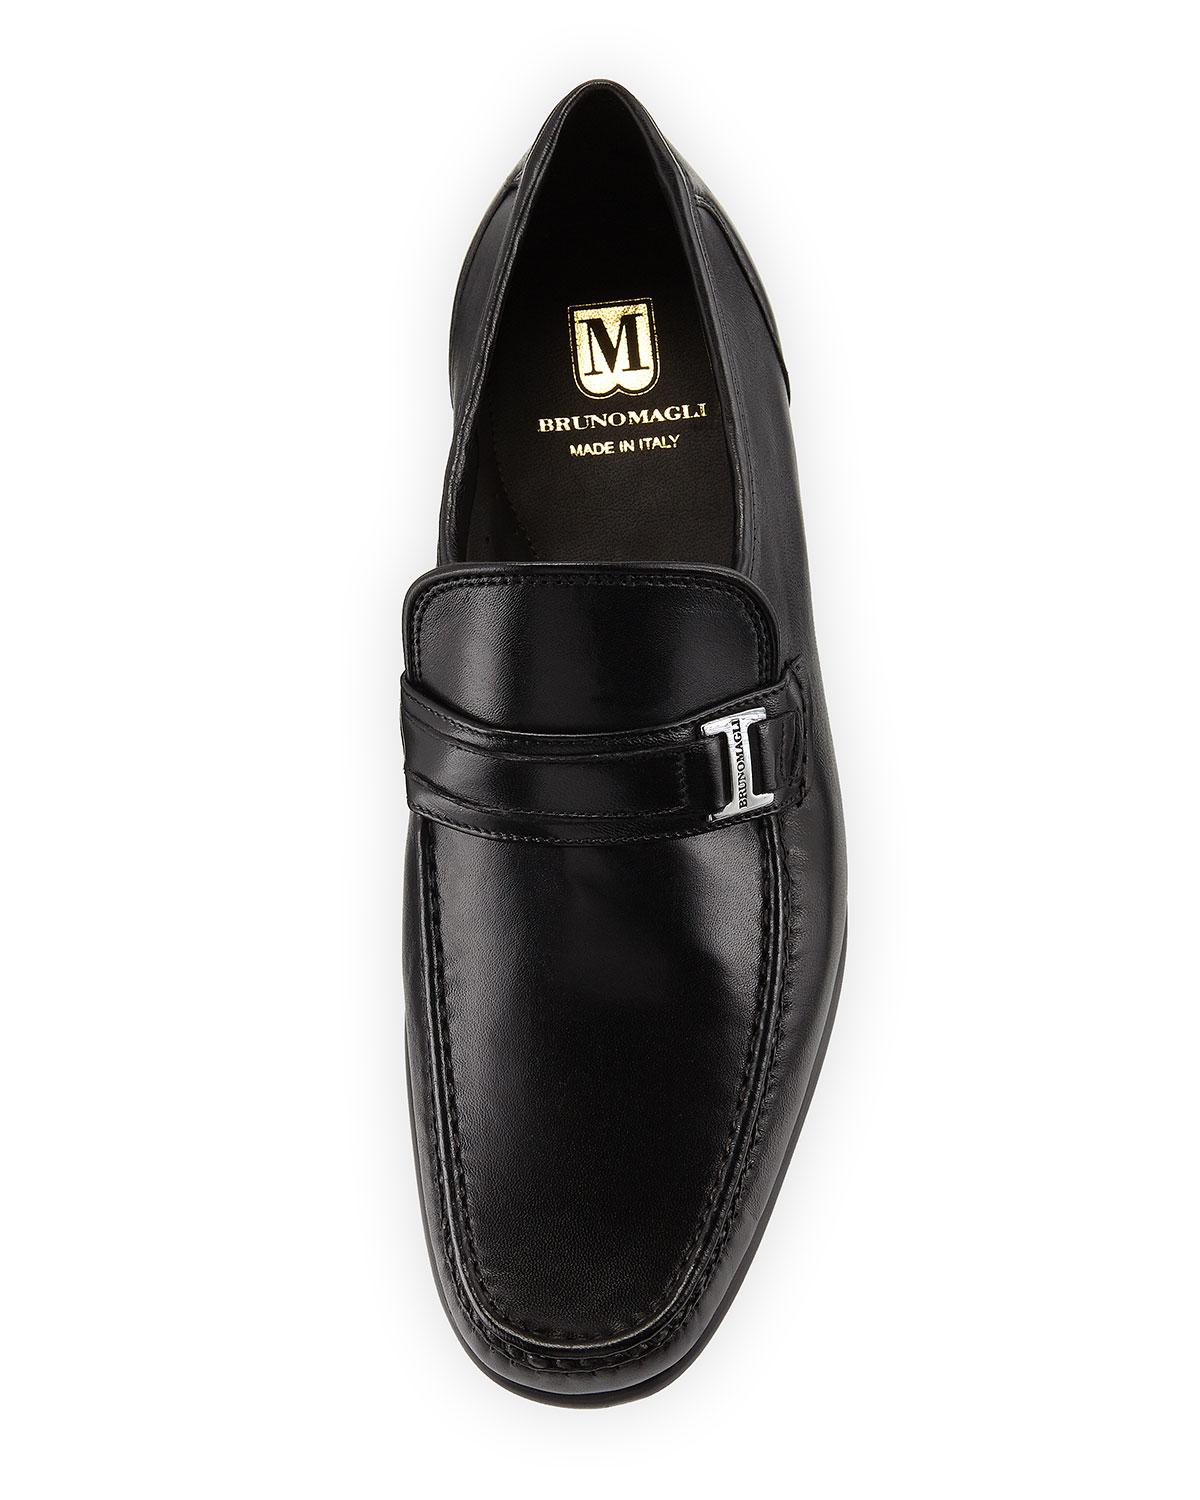 Bruno Magli Leather Men's Sulo Slip-on Loafers in Black for Men - Lyst